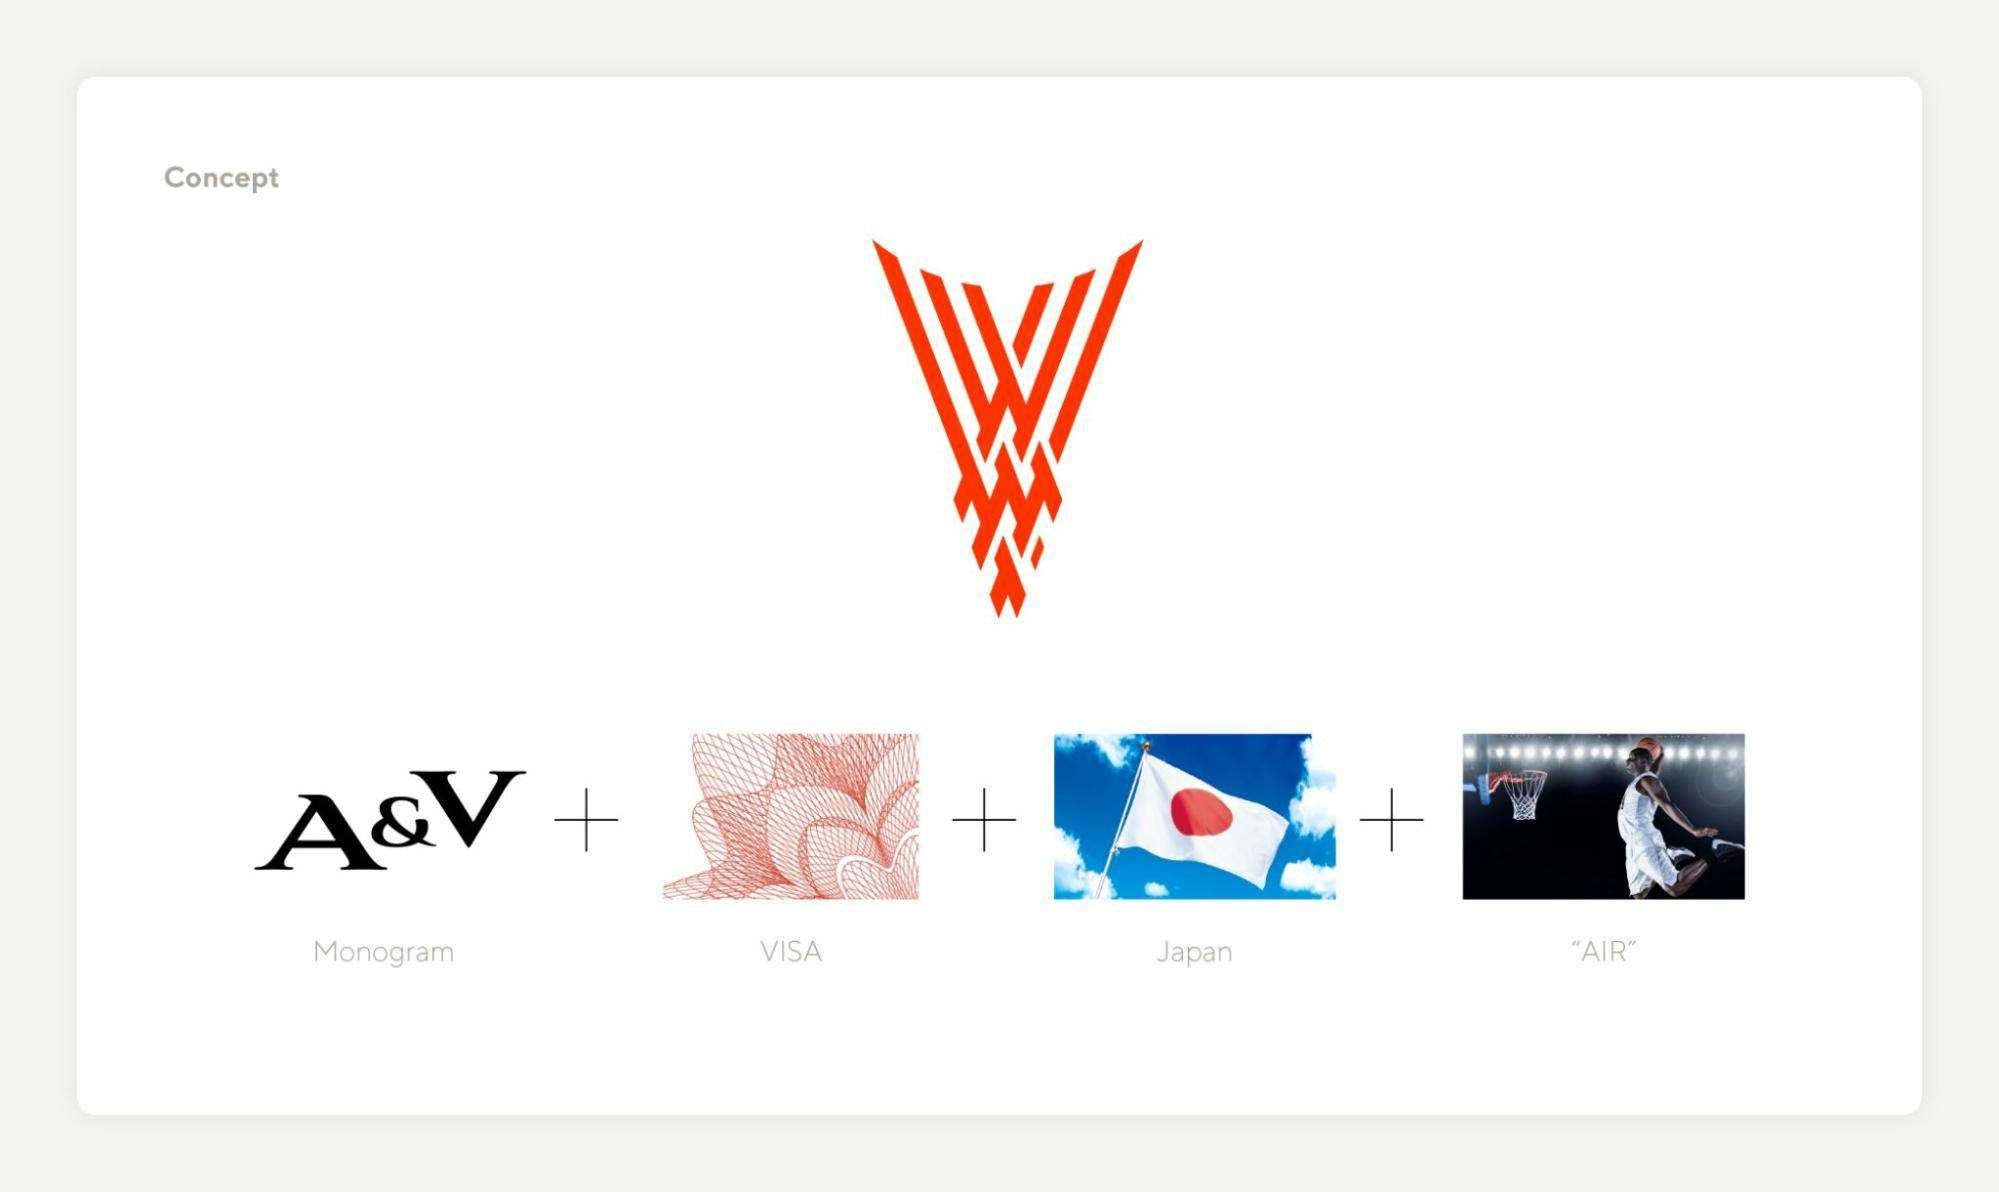 Monogram+VISA+Japan+"AIR"と書かれた上に、AIR VISAのロゴが描かれている。